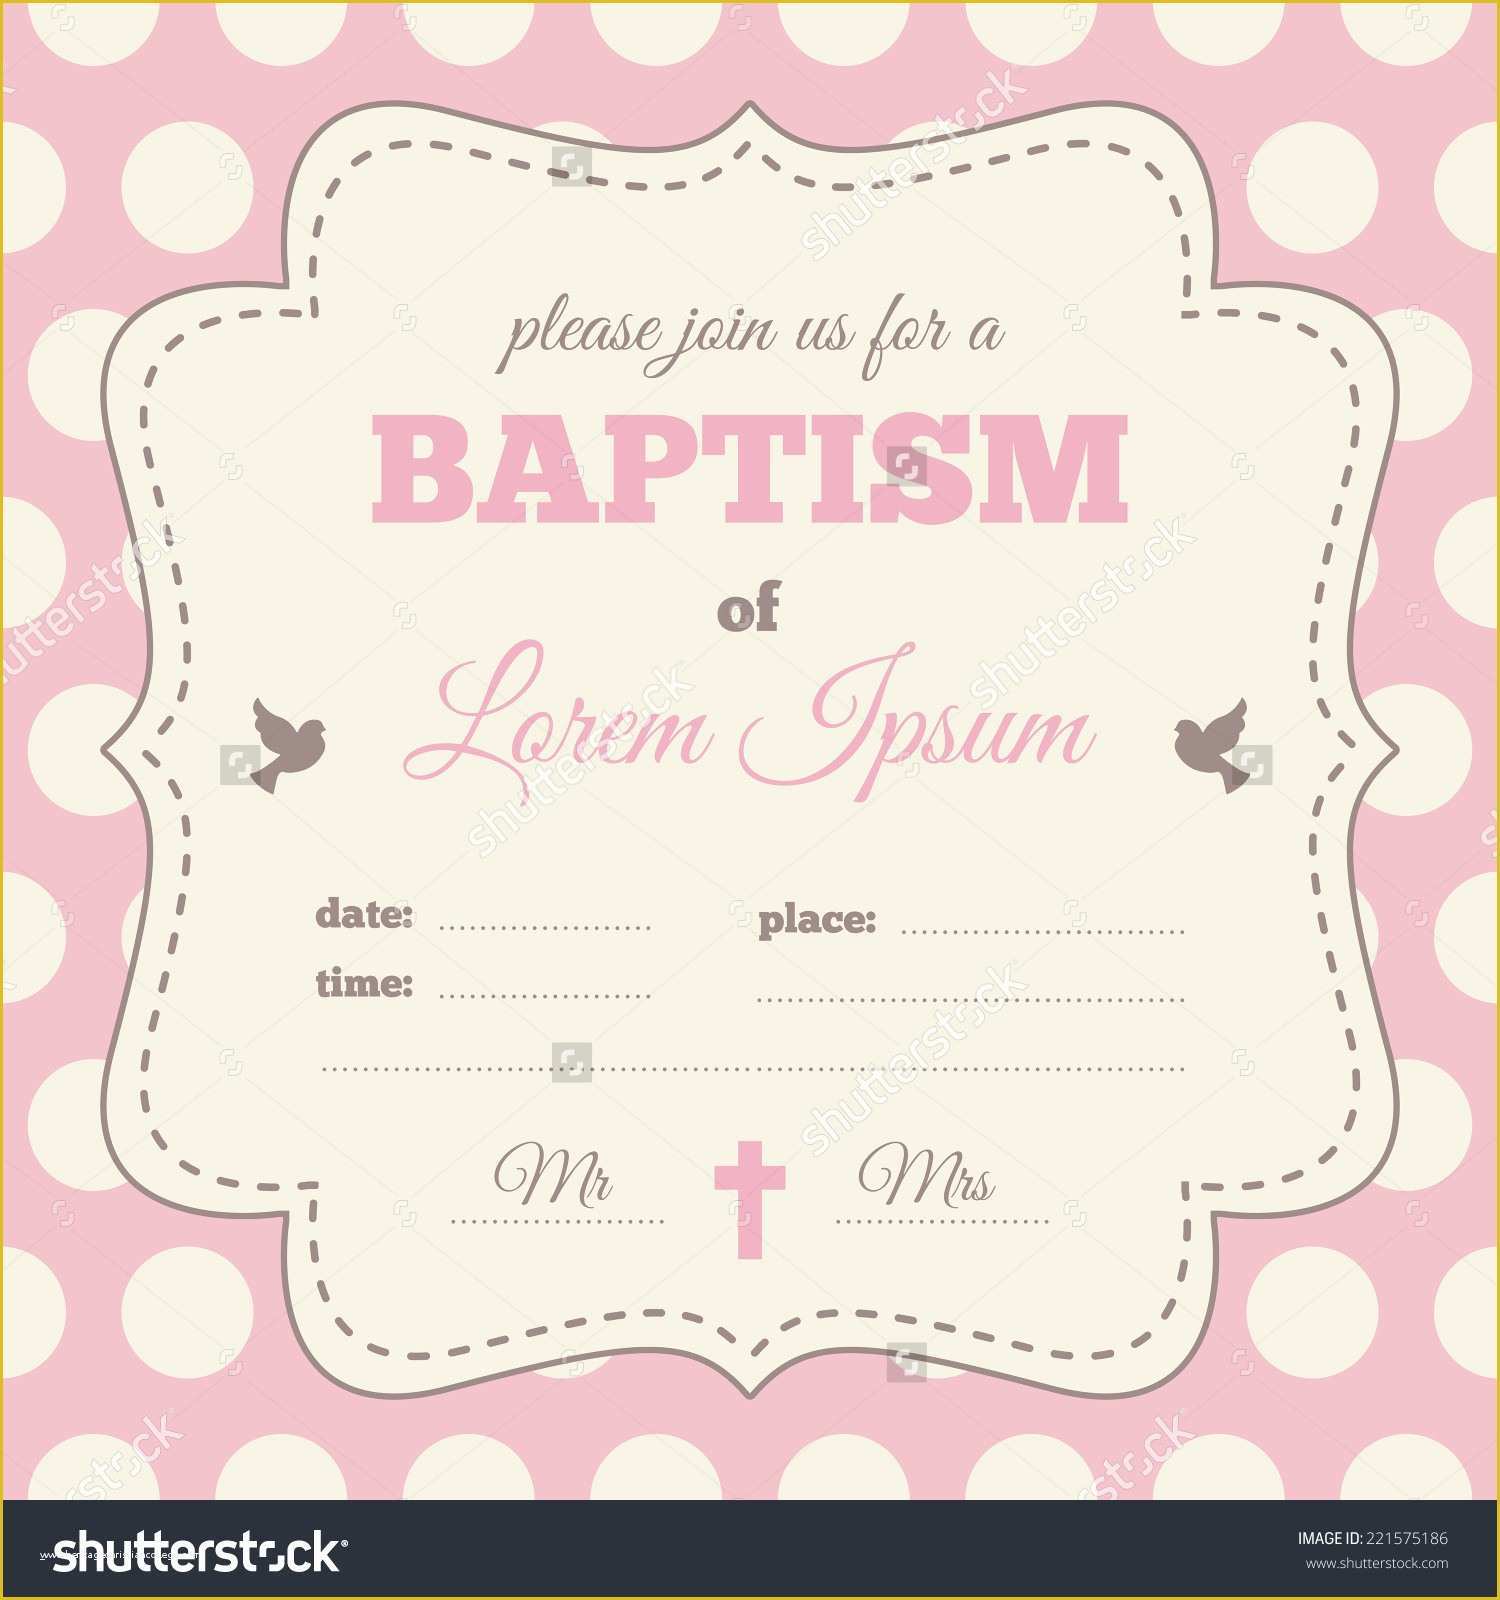 Baby Girl Baptism Invitation Free Templates Of Baby Girl Baptism Invitation Free Templates Downloadable